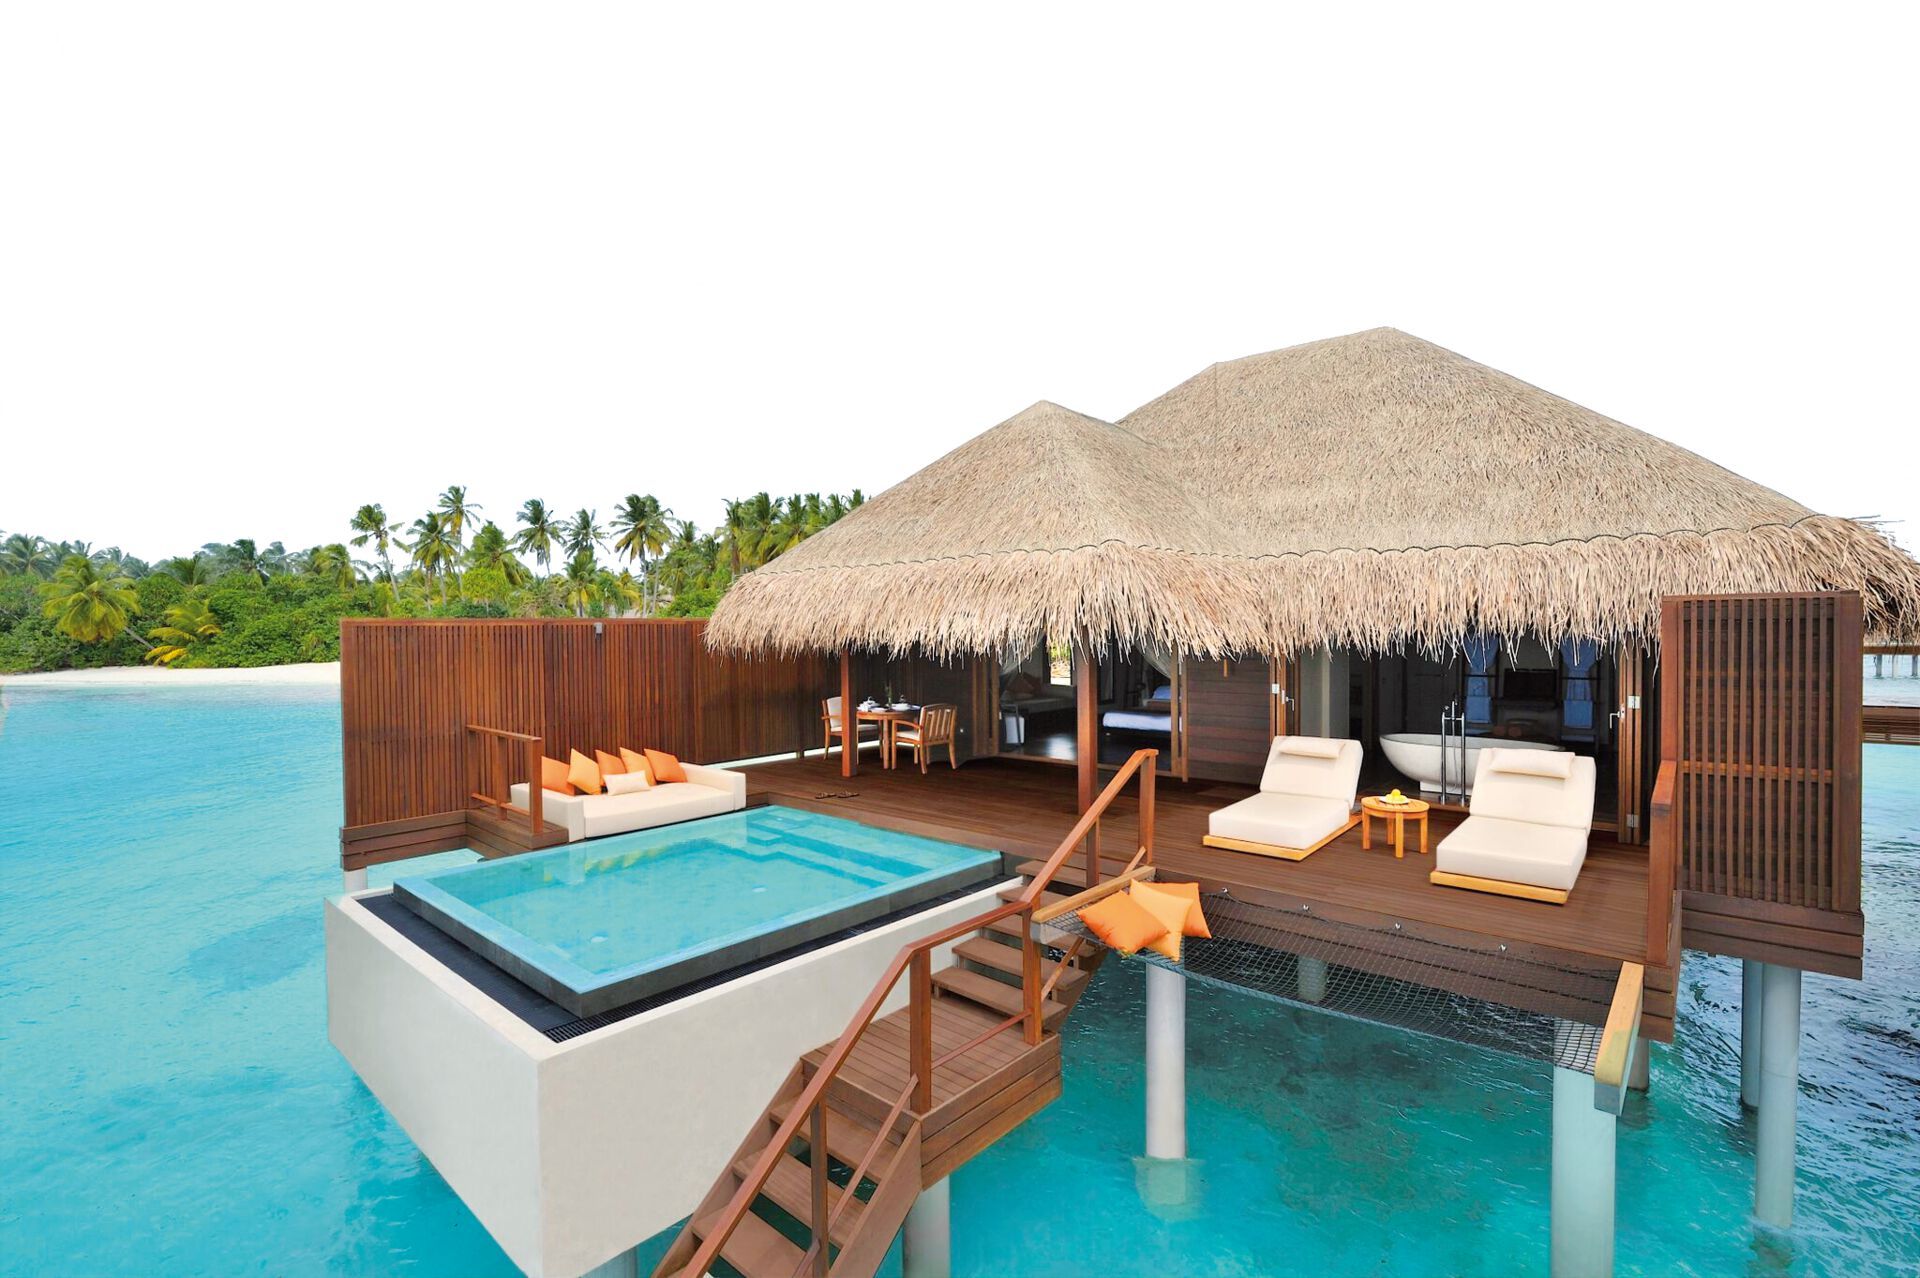 Maldives - Hotel Ayada Maldives 5* - transfert inclus